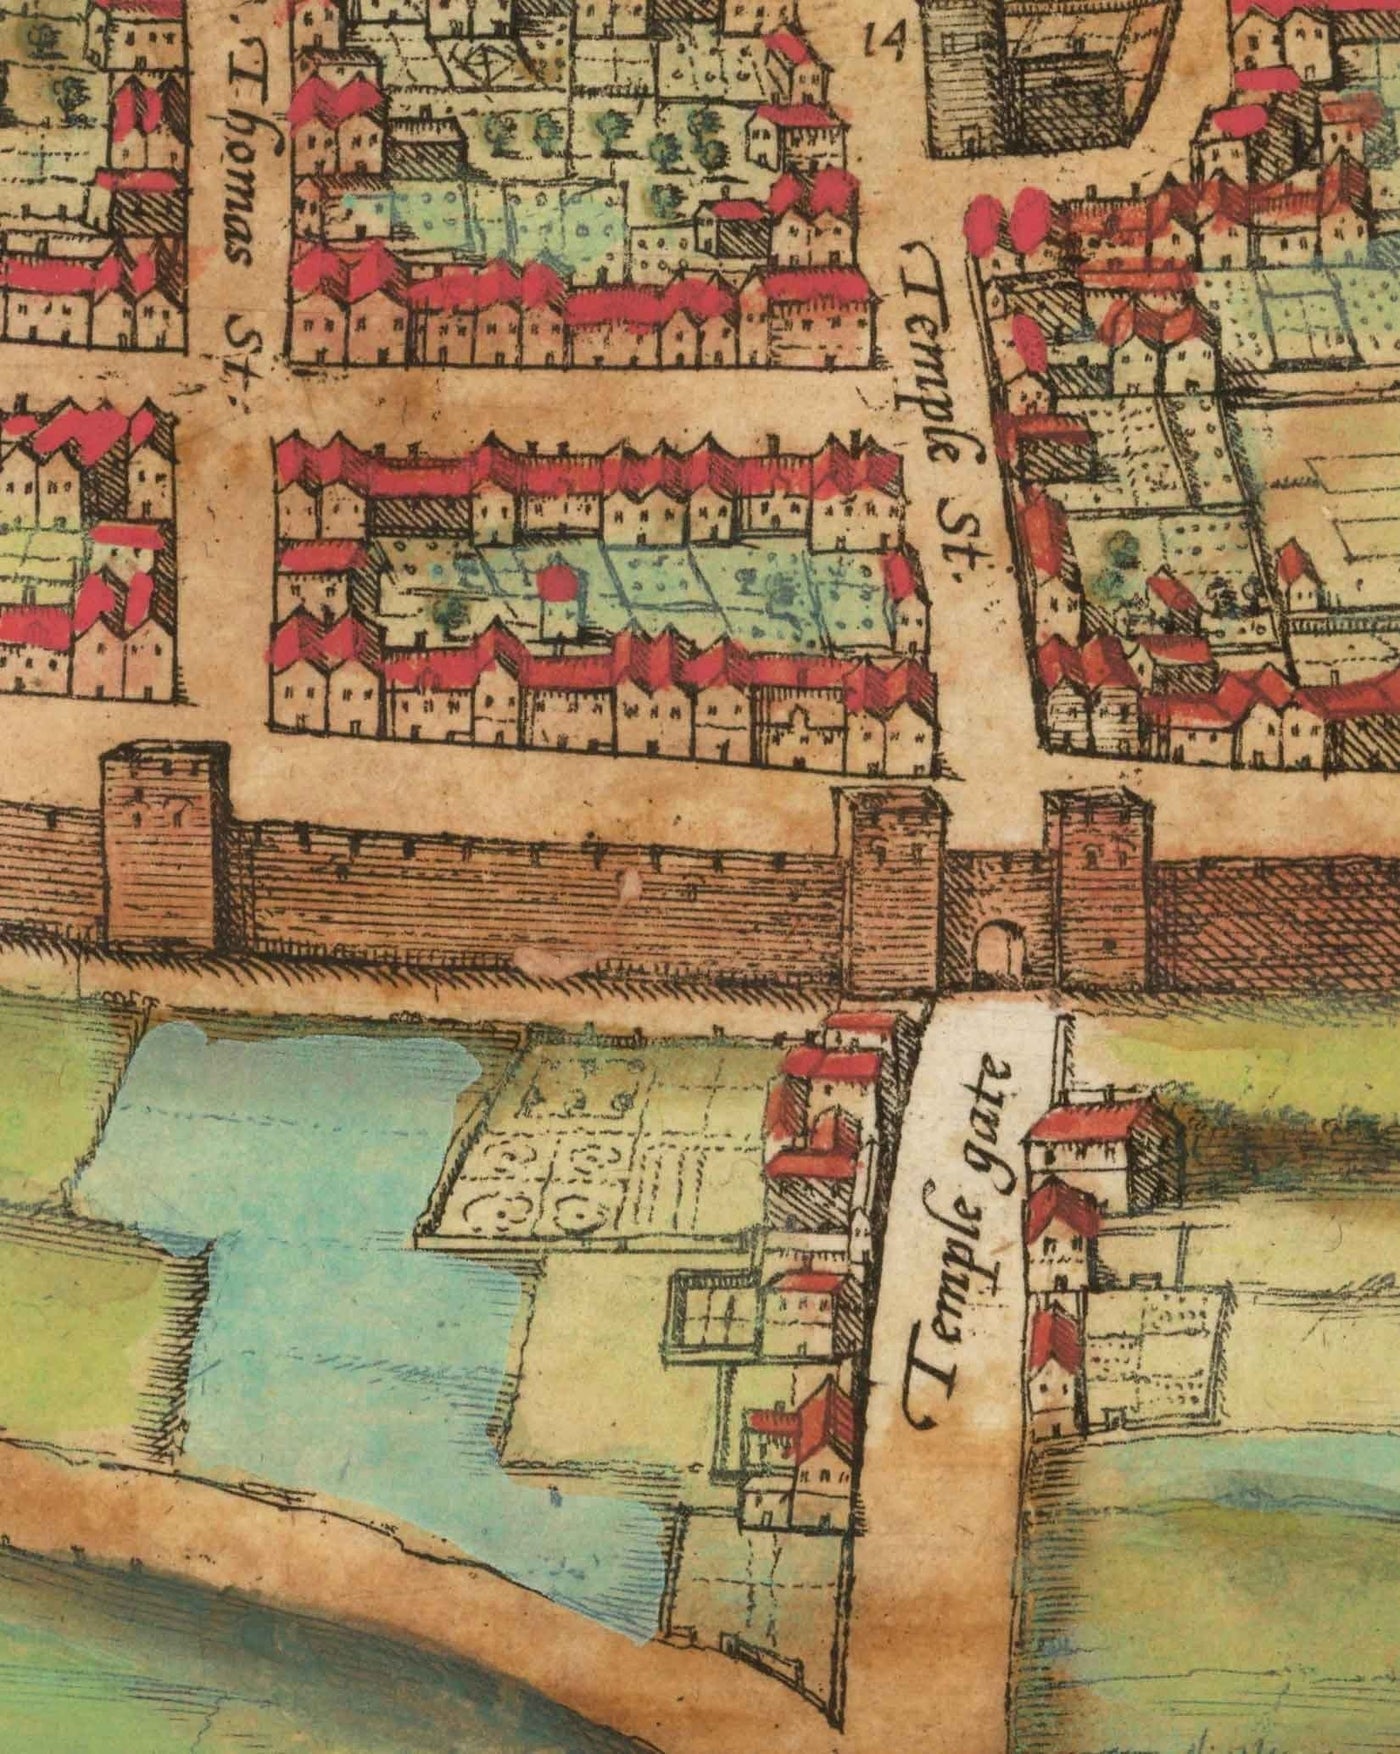 Mapa antiguo de Bristol, 1588 por Braun - Brightstowe, Avon, St Nicholas, Newgate, Escudo de armas